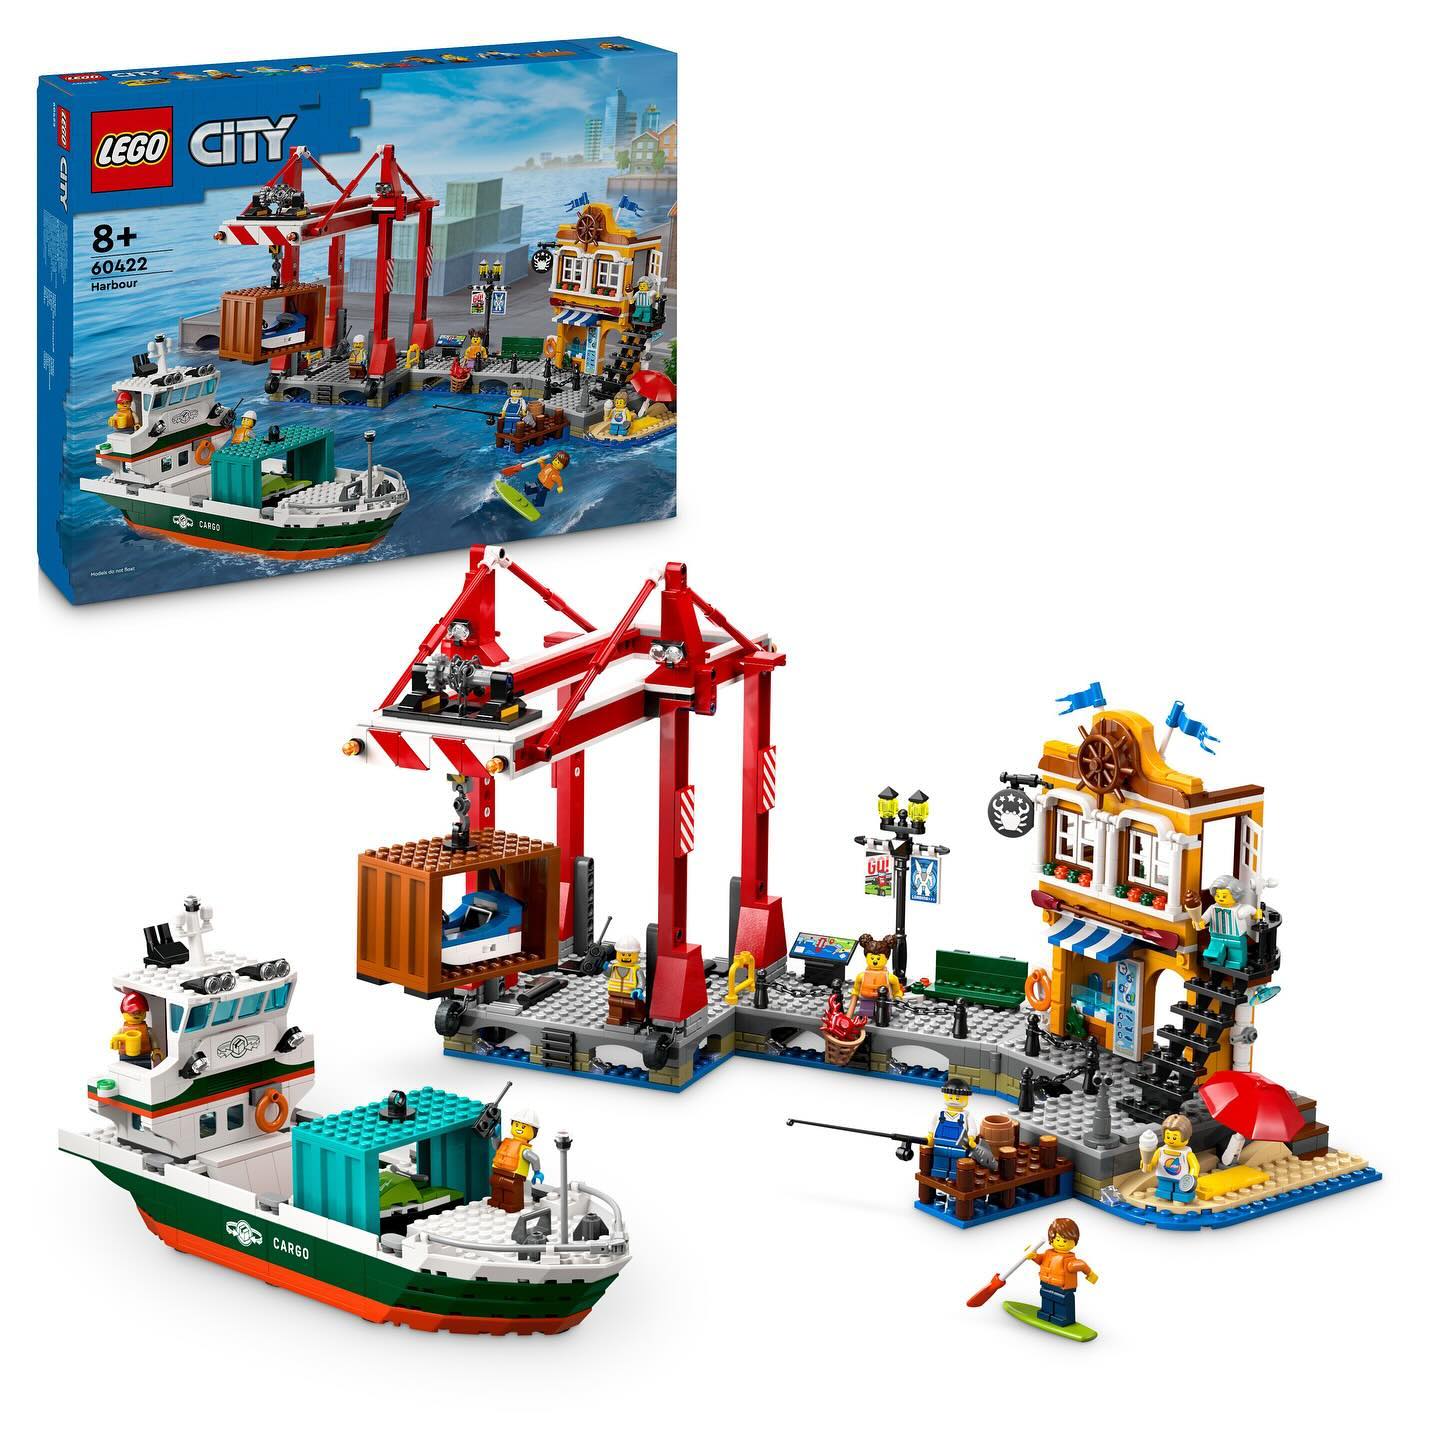 LEGO City Harbour 60422